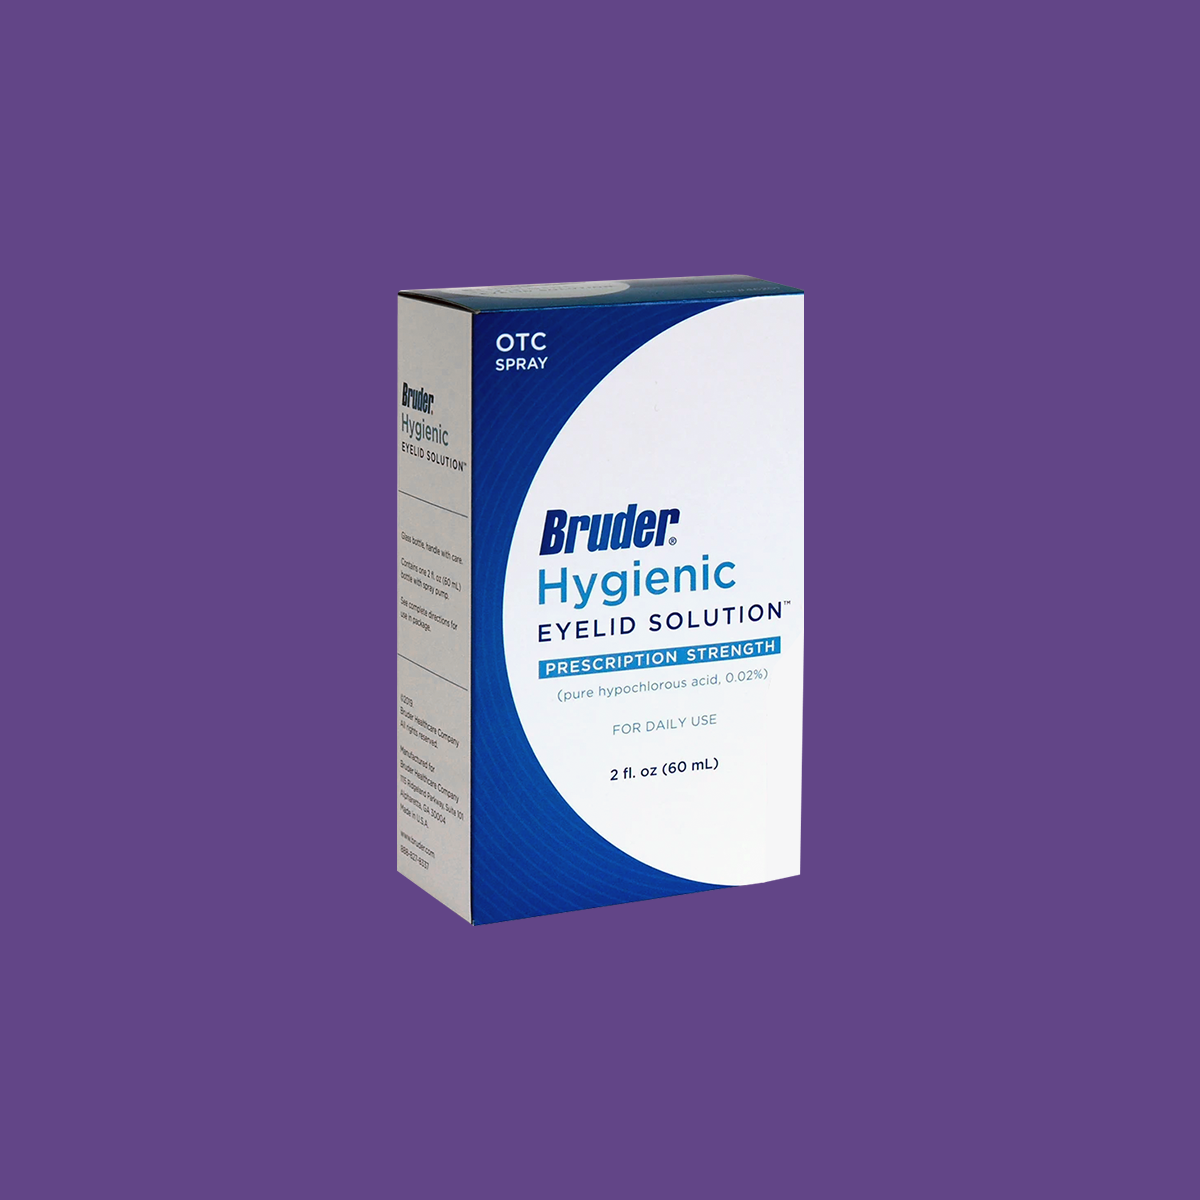 Bruder Hygienic Eyelid Solution (2 fl. oz 60mL Bottle) 2 month Supply